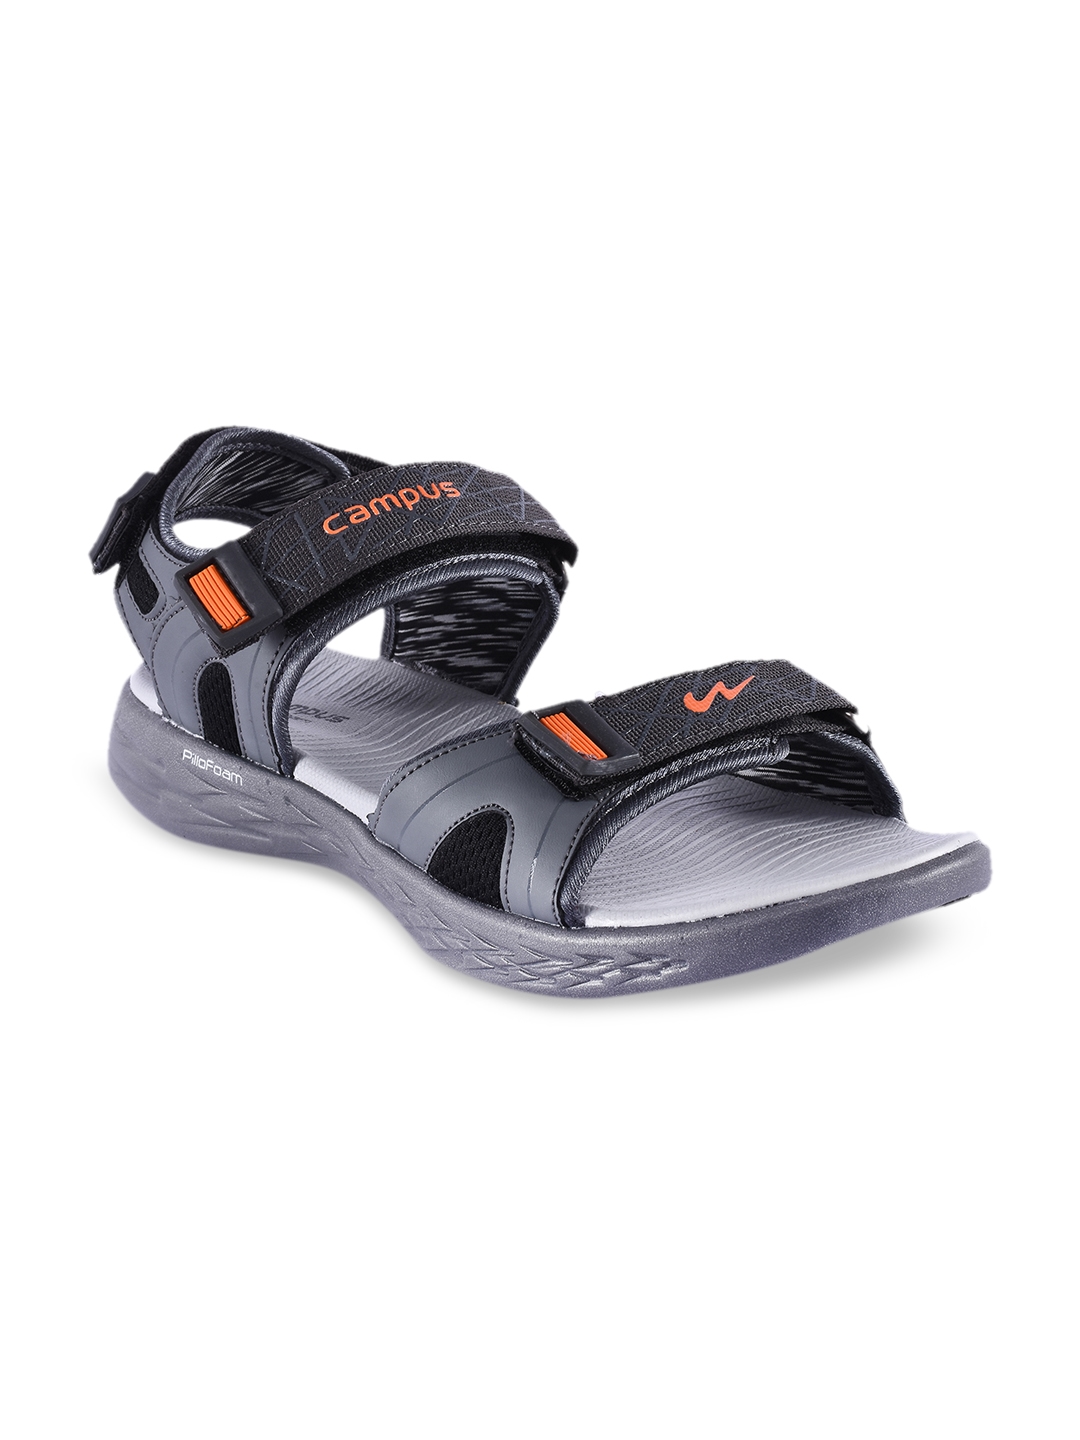 Campus Sports Sandals Flash Sales | bellvalefarms.com